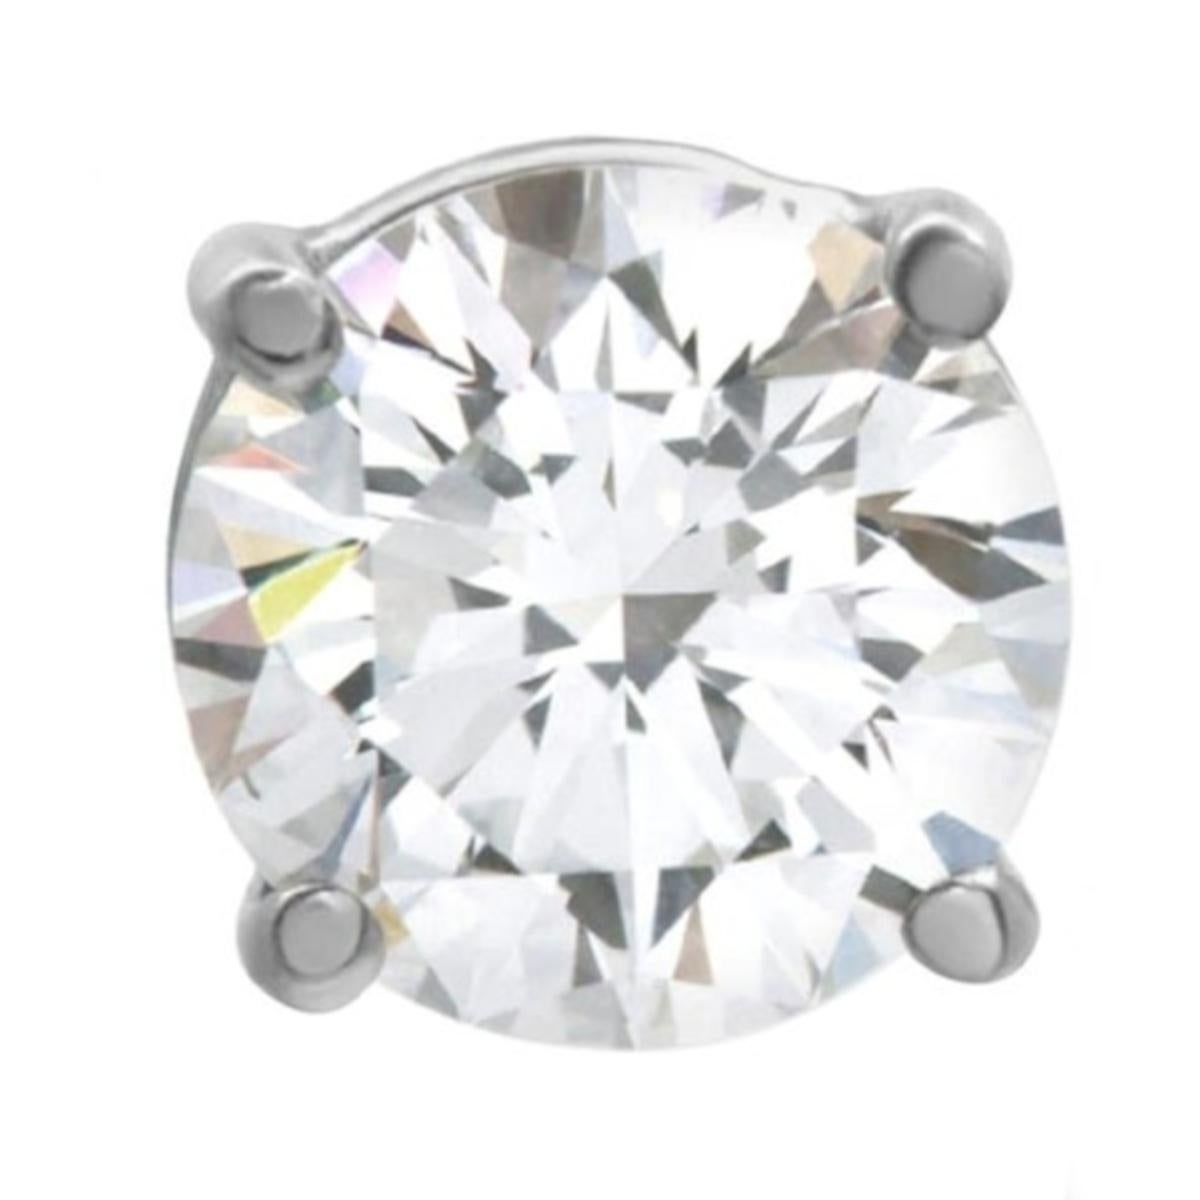 1 carat diamond studs